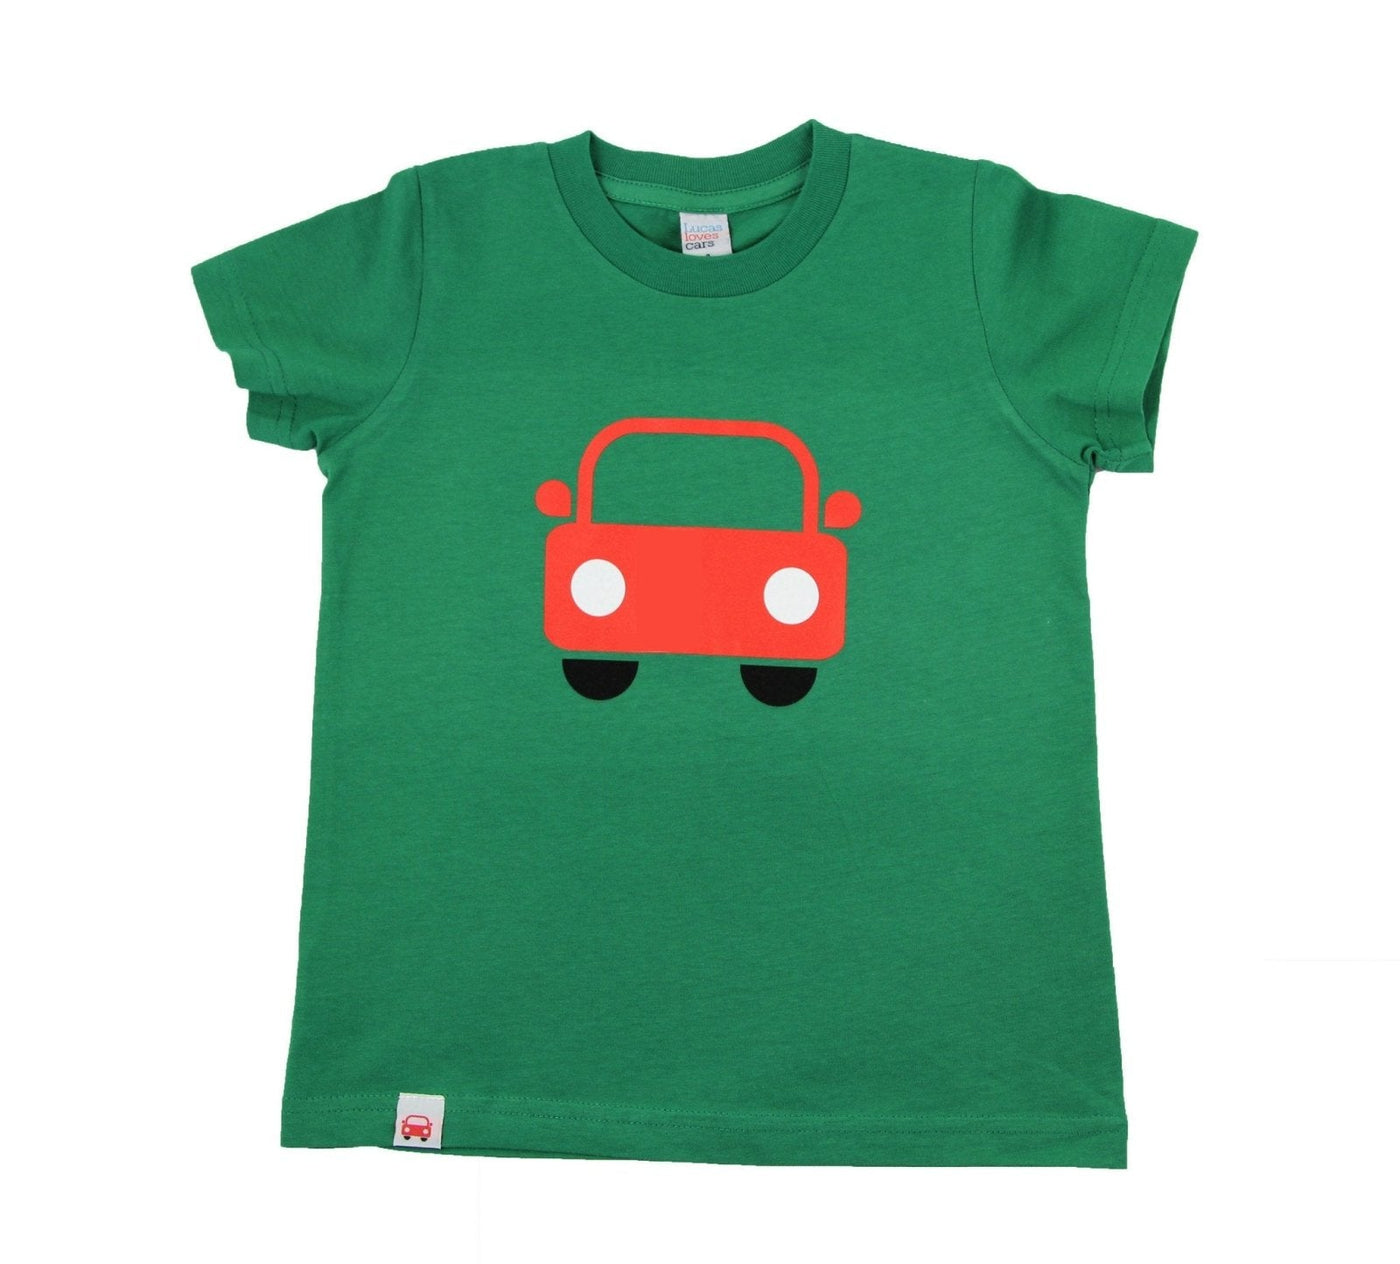 T-shirt. Little red car | Lucas Loves Cars